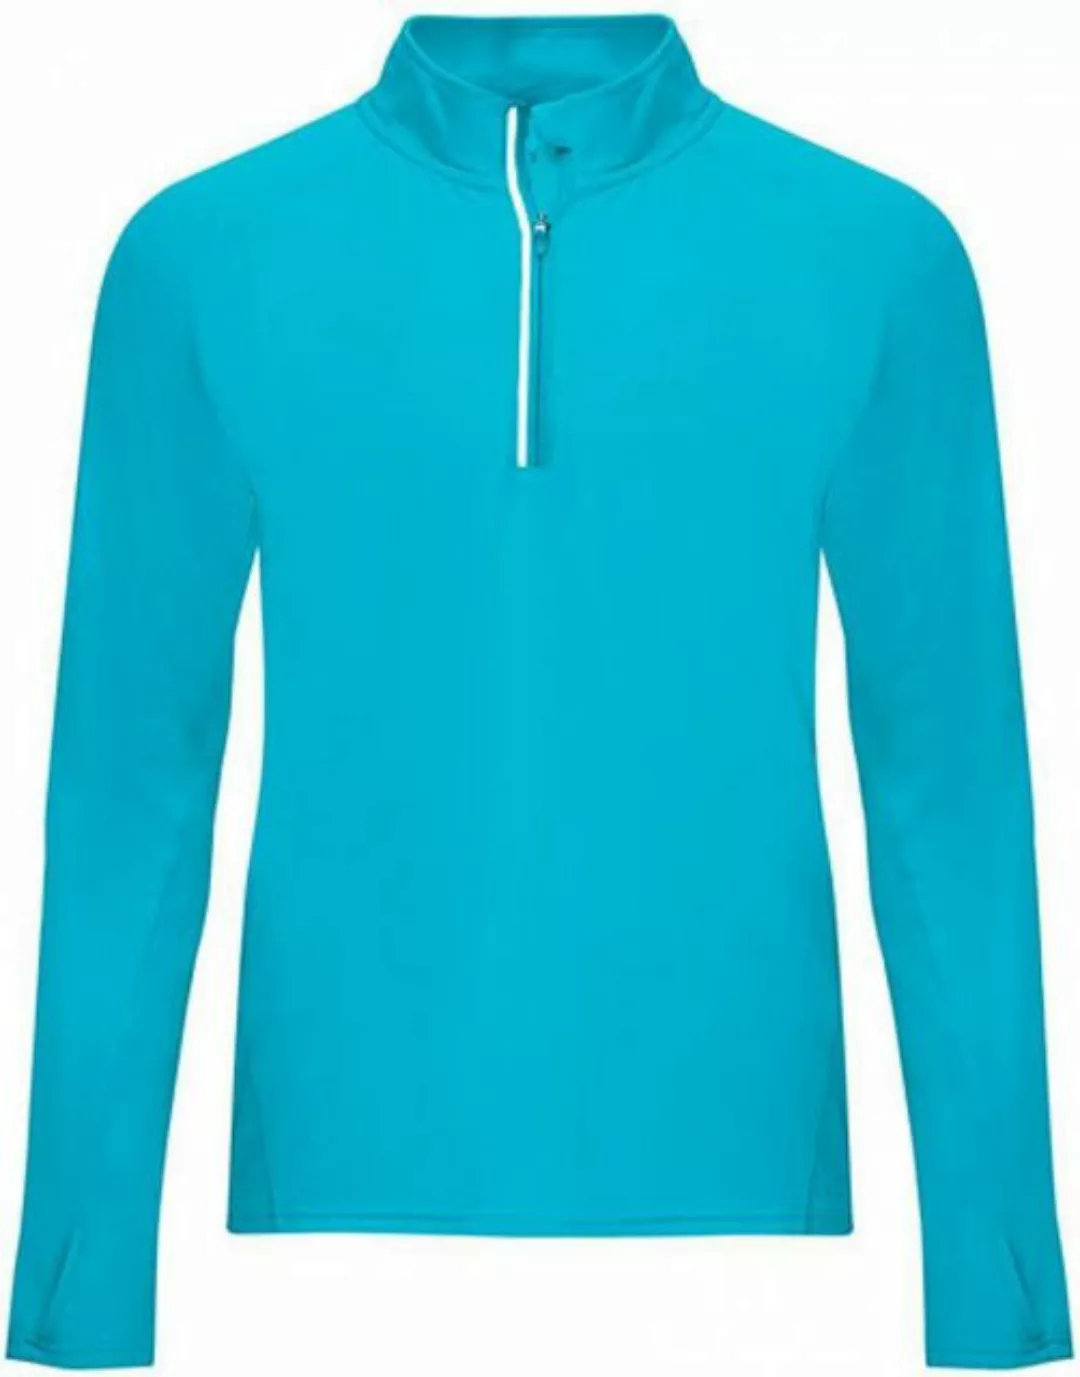 Roly Sweatshirt Men´s Melbourne Sweatshirt S bis XXL günstig online kaufen